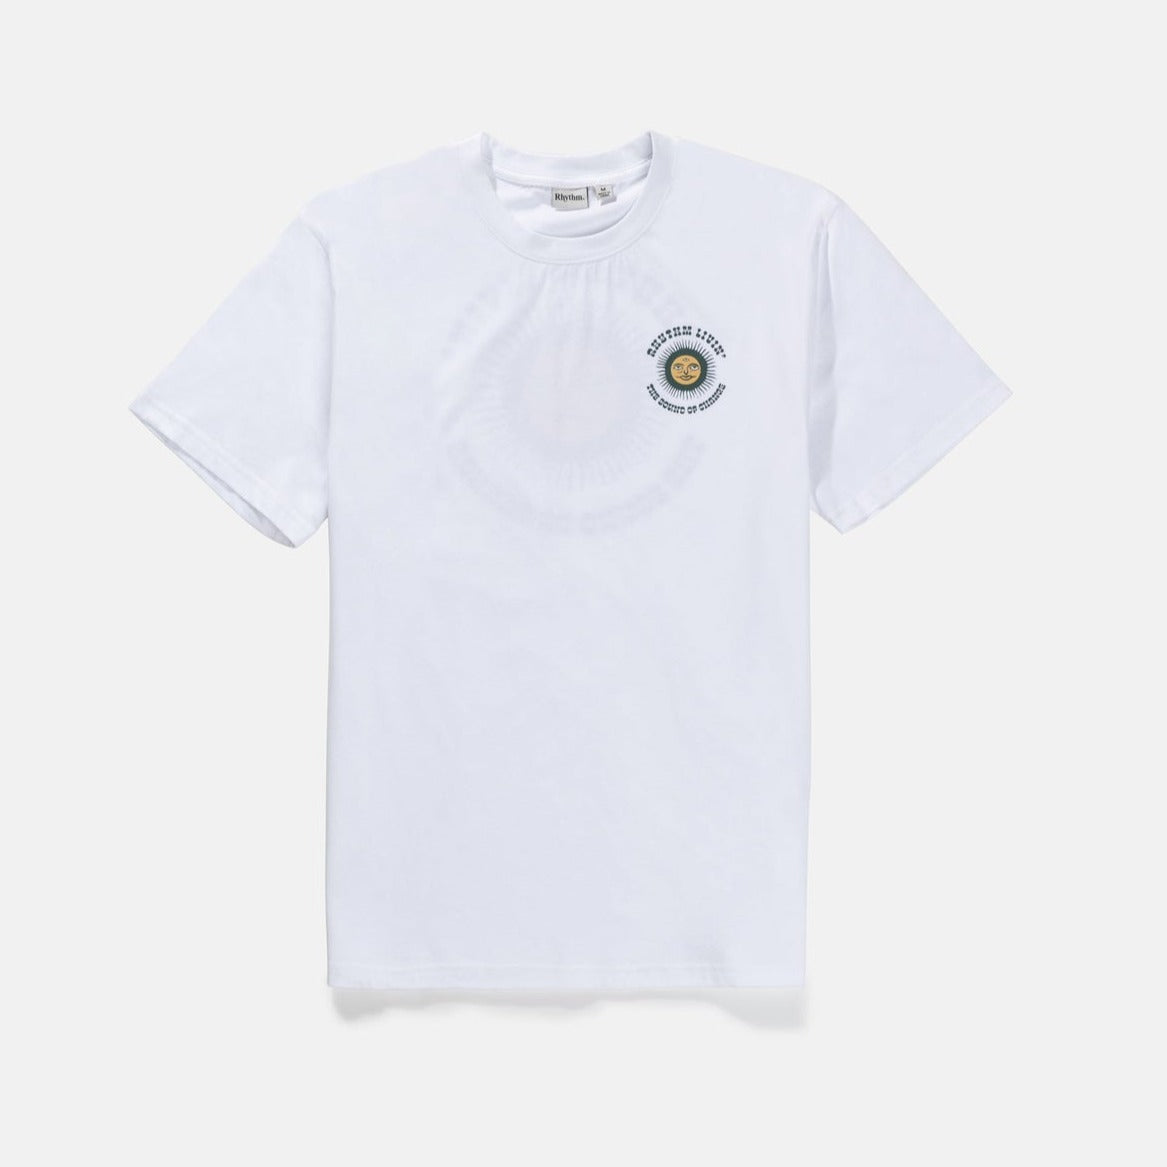 t-shirt-homme-sun-life-blanc-0124M-PT03-RHYTHM. T-SHIRT ORGANIC POUR HOMME. sUNLIFE, RHYTHM DM2 SHOP 03